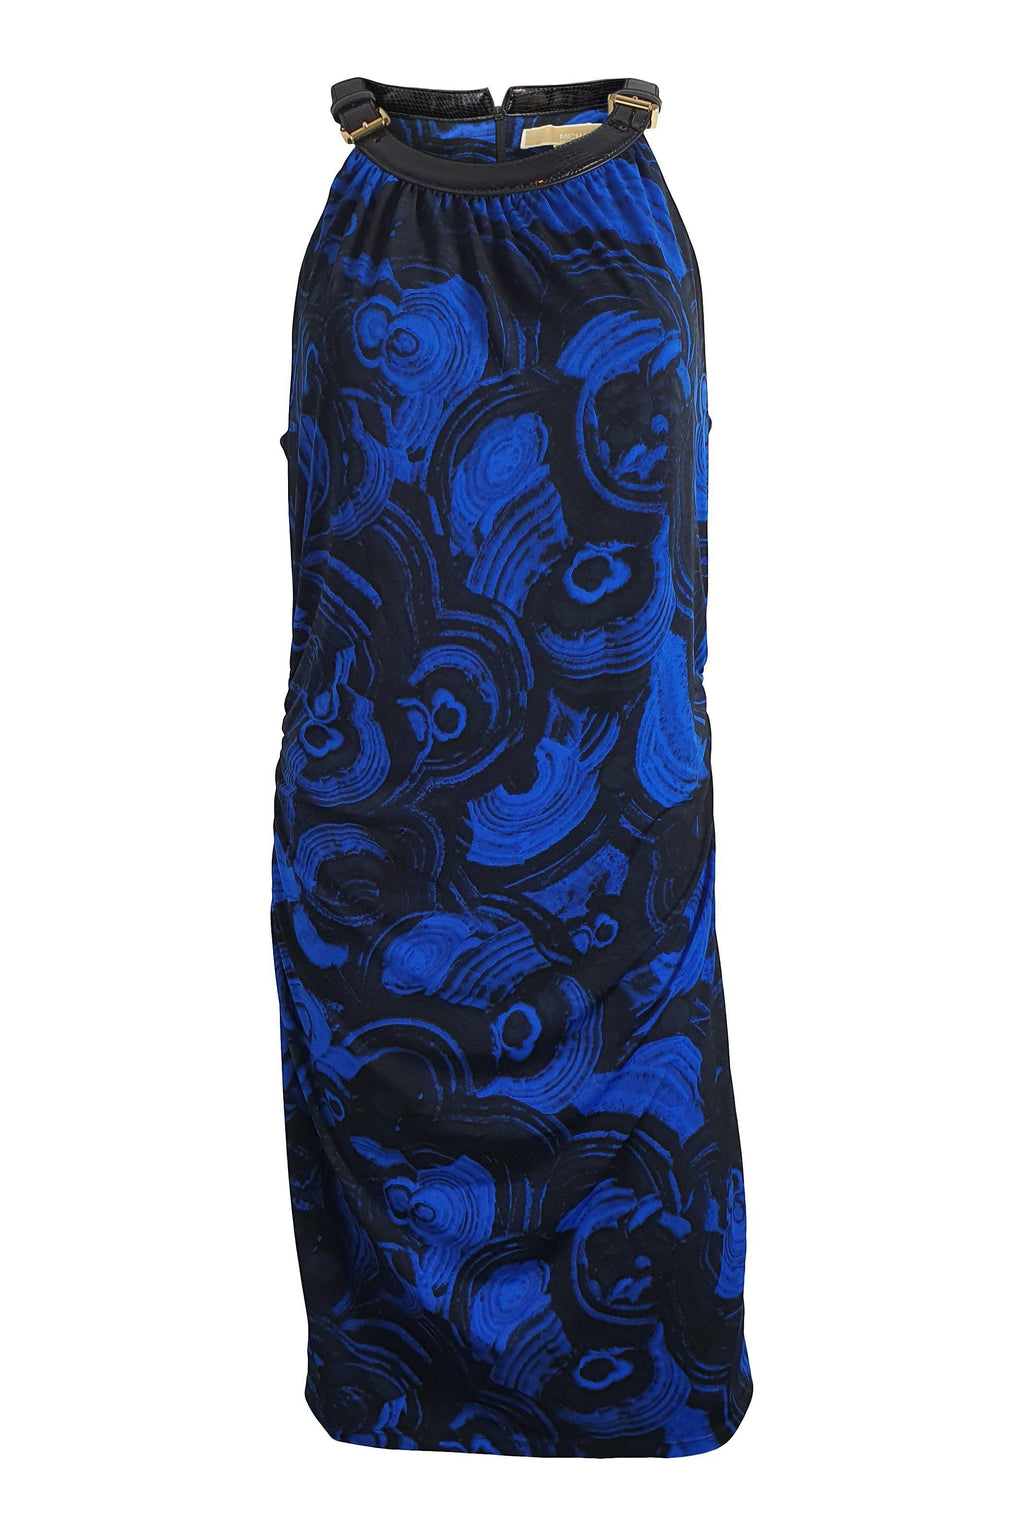 MICHAEL KORS Blue Halter Neck Graphic Print Jersey Bodycon Dress (L)-Michael Kors-The Freperie